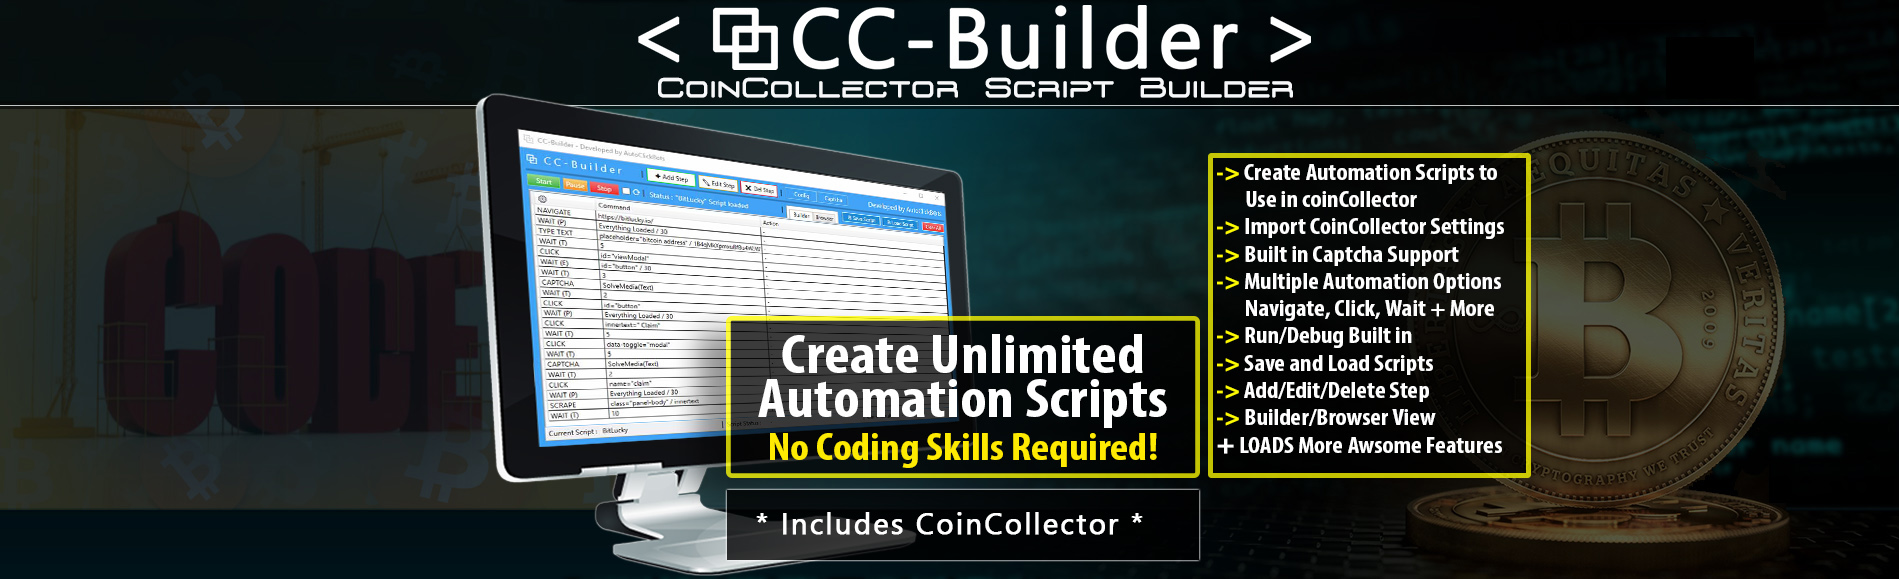 CC_Builder - Custom Automation Script Creator